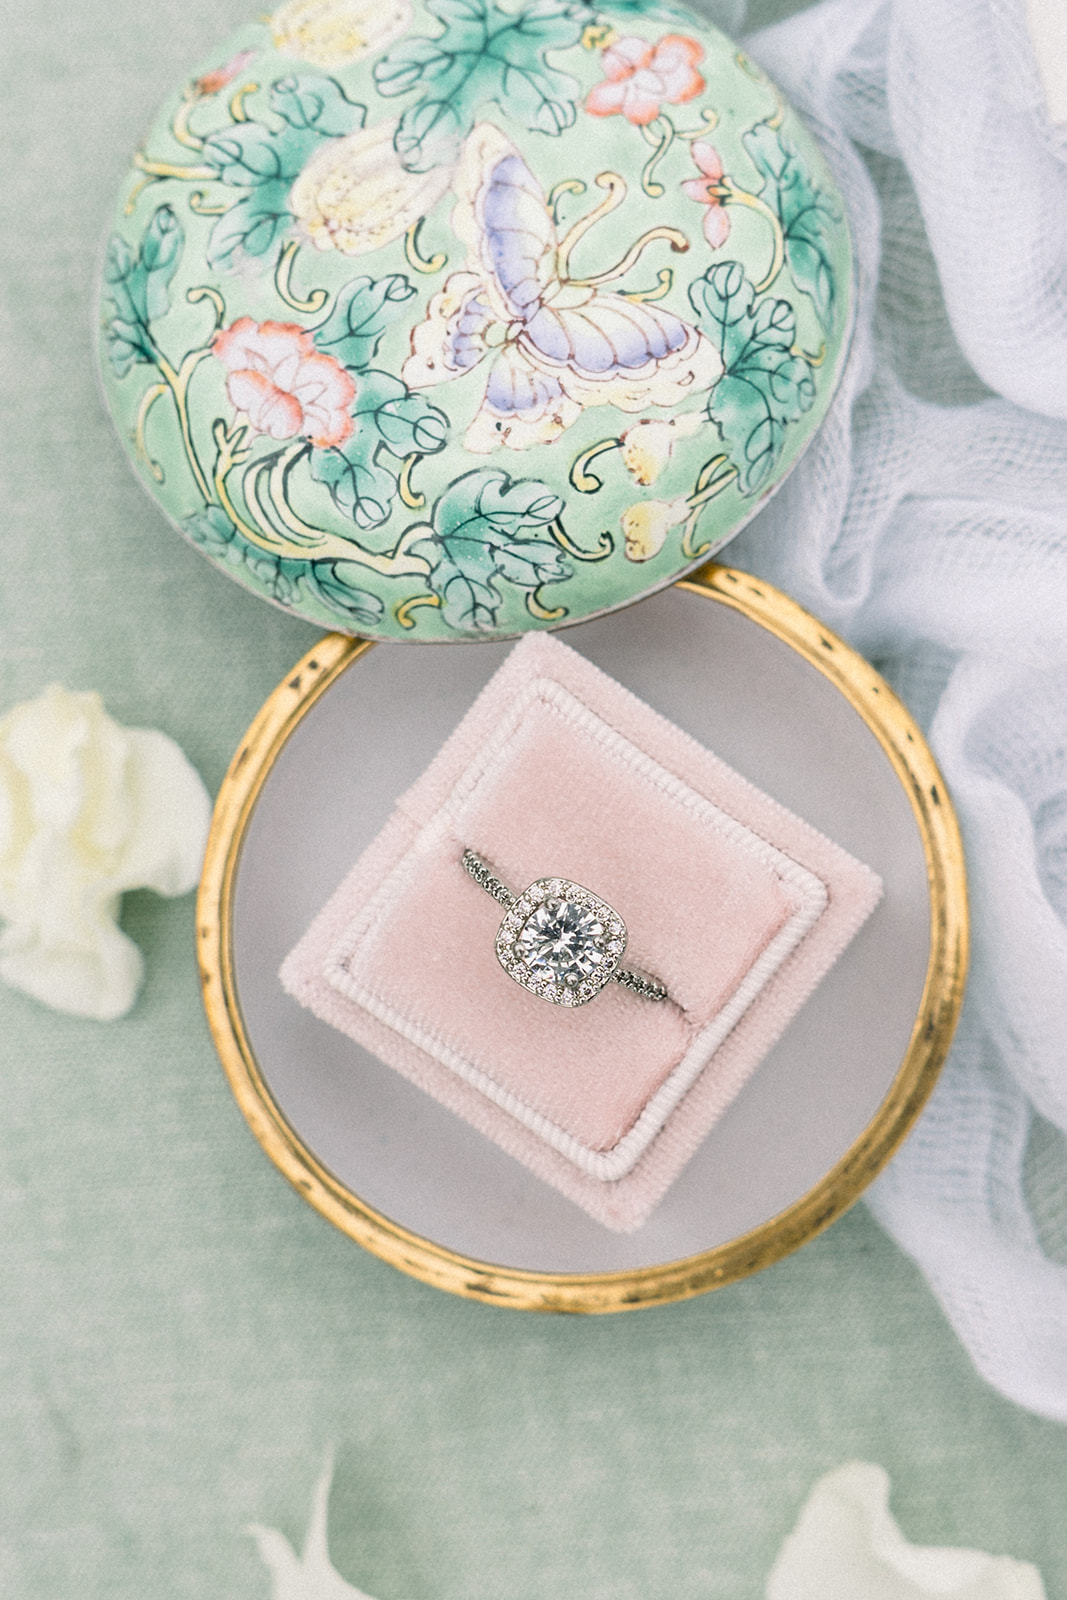 Artistic shot by Tiffany Longeway of wedding rings amidst elegant floral arrangements at Sunstone Winery, Southern Calif